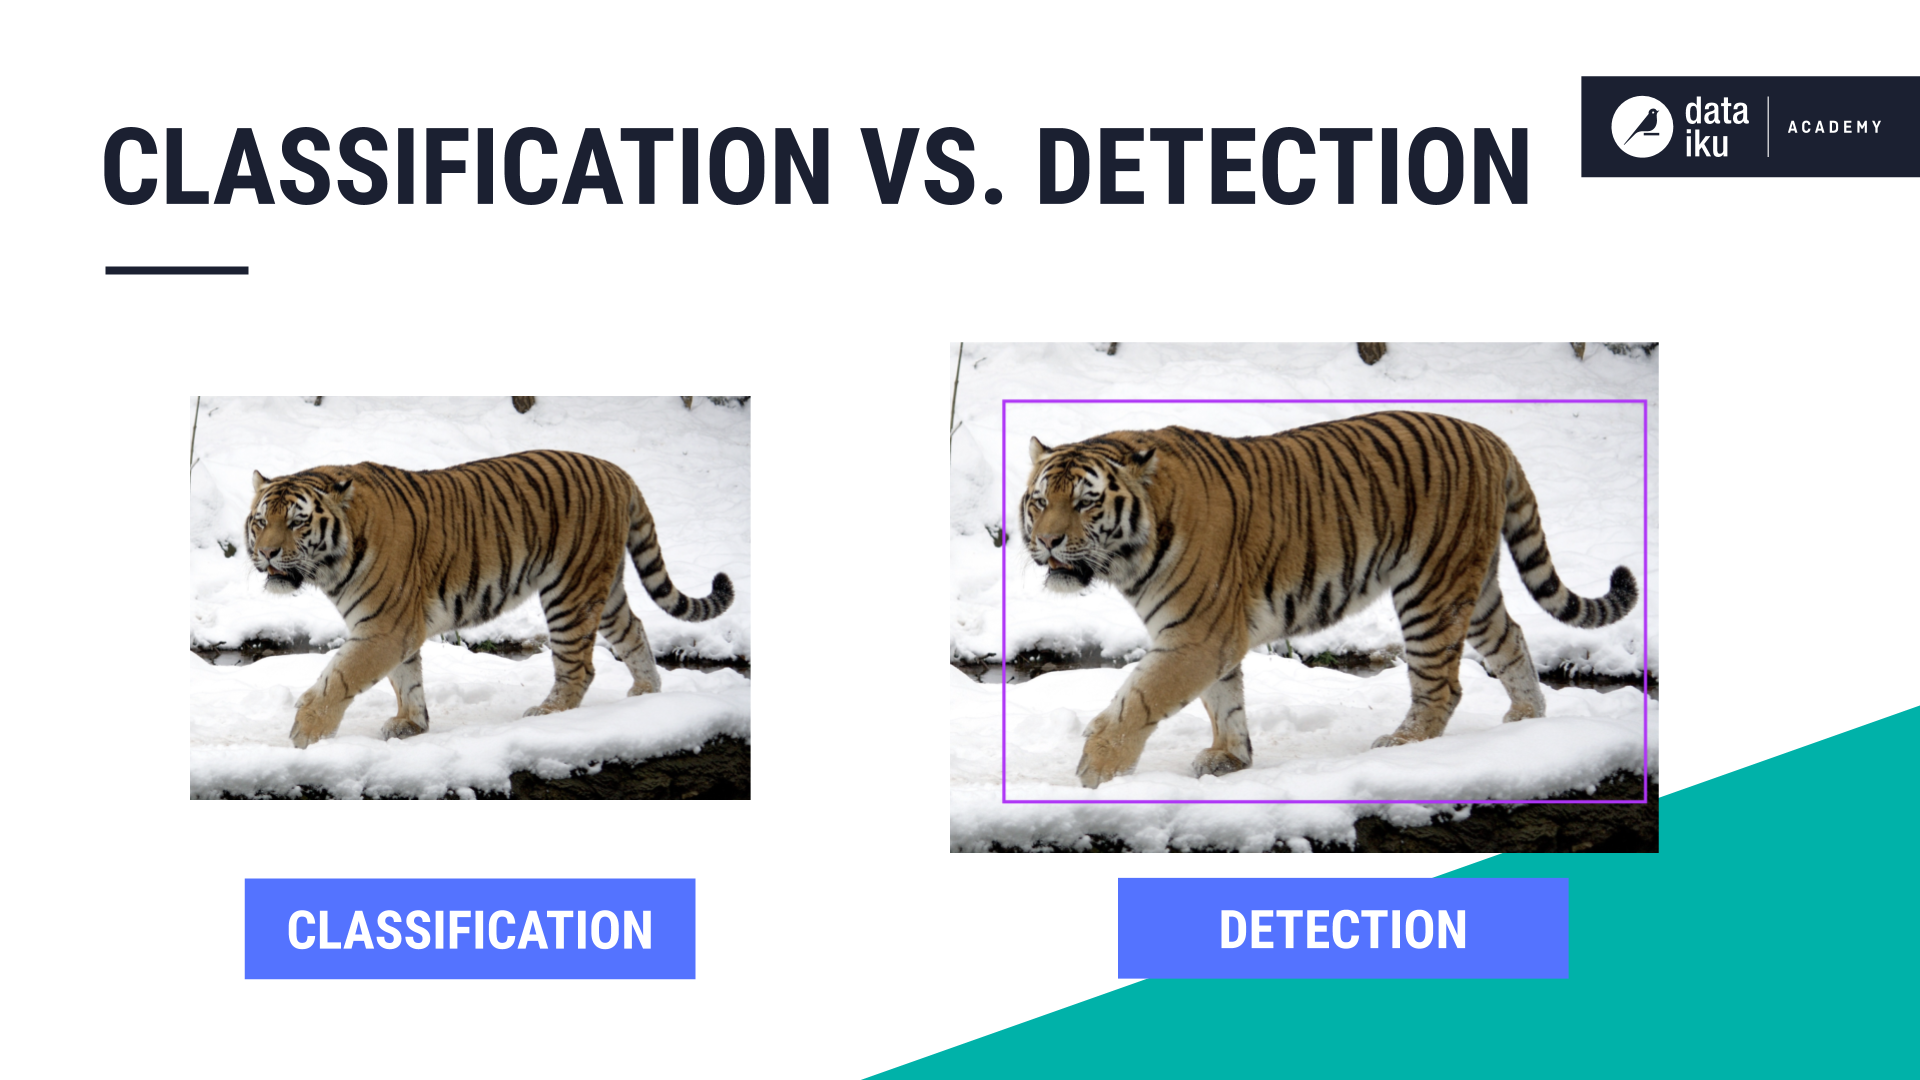 ../../../_images/classification-vs-detection1.png